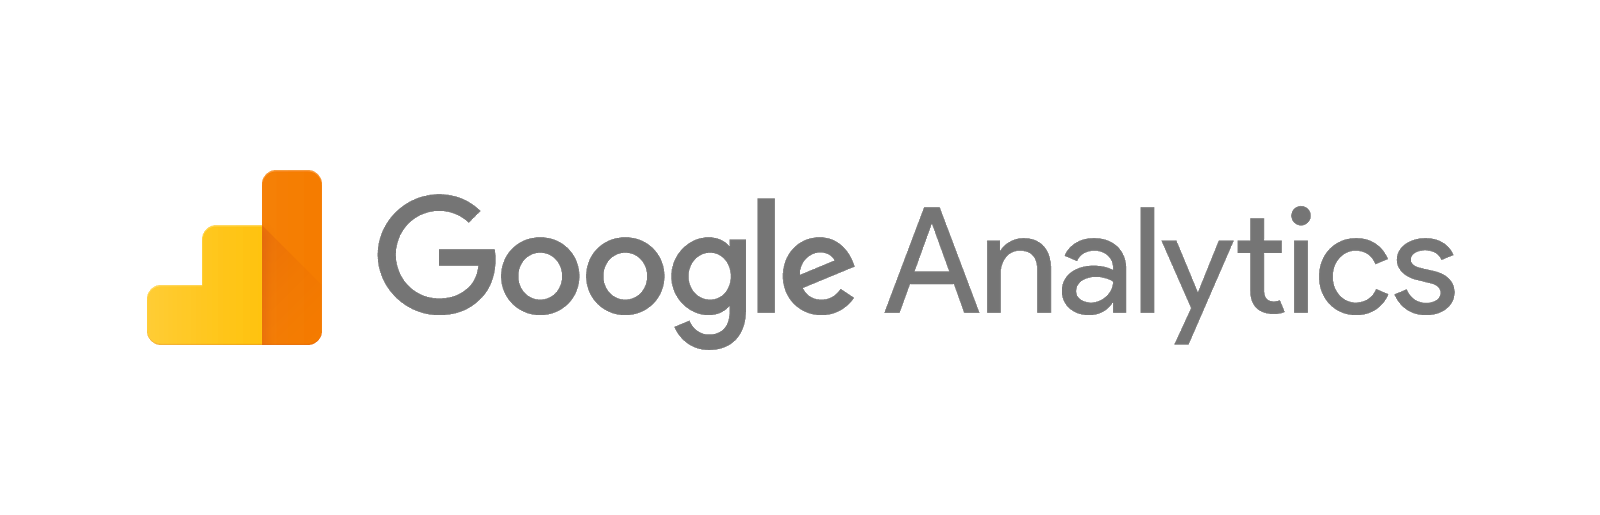 Googleアナリティクスのロゴマーク